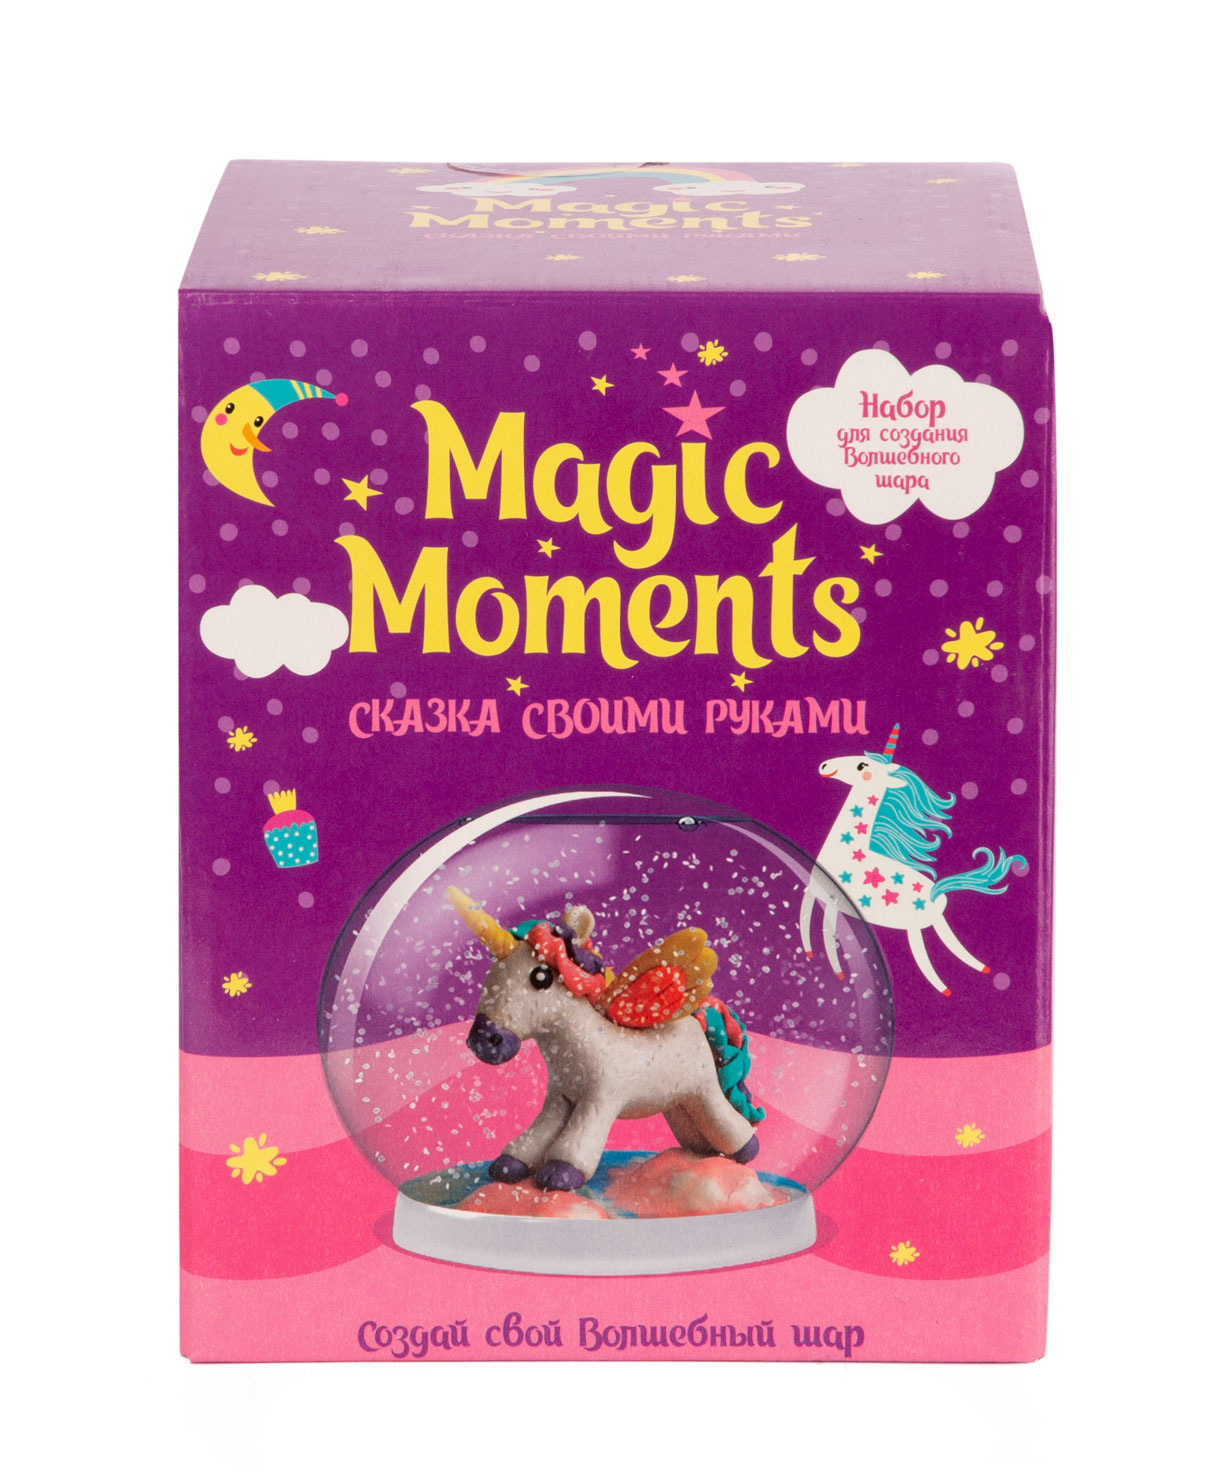 Collection `Bonasens` magic ball unicorn